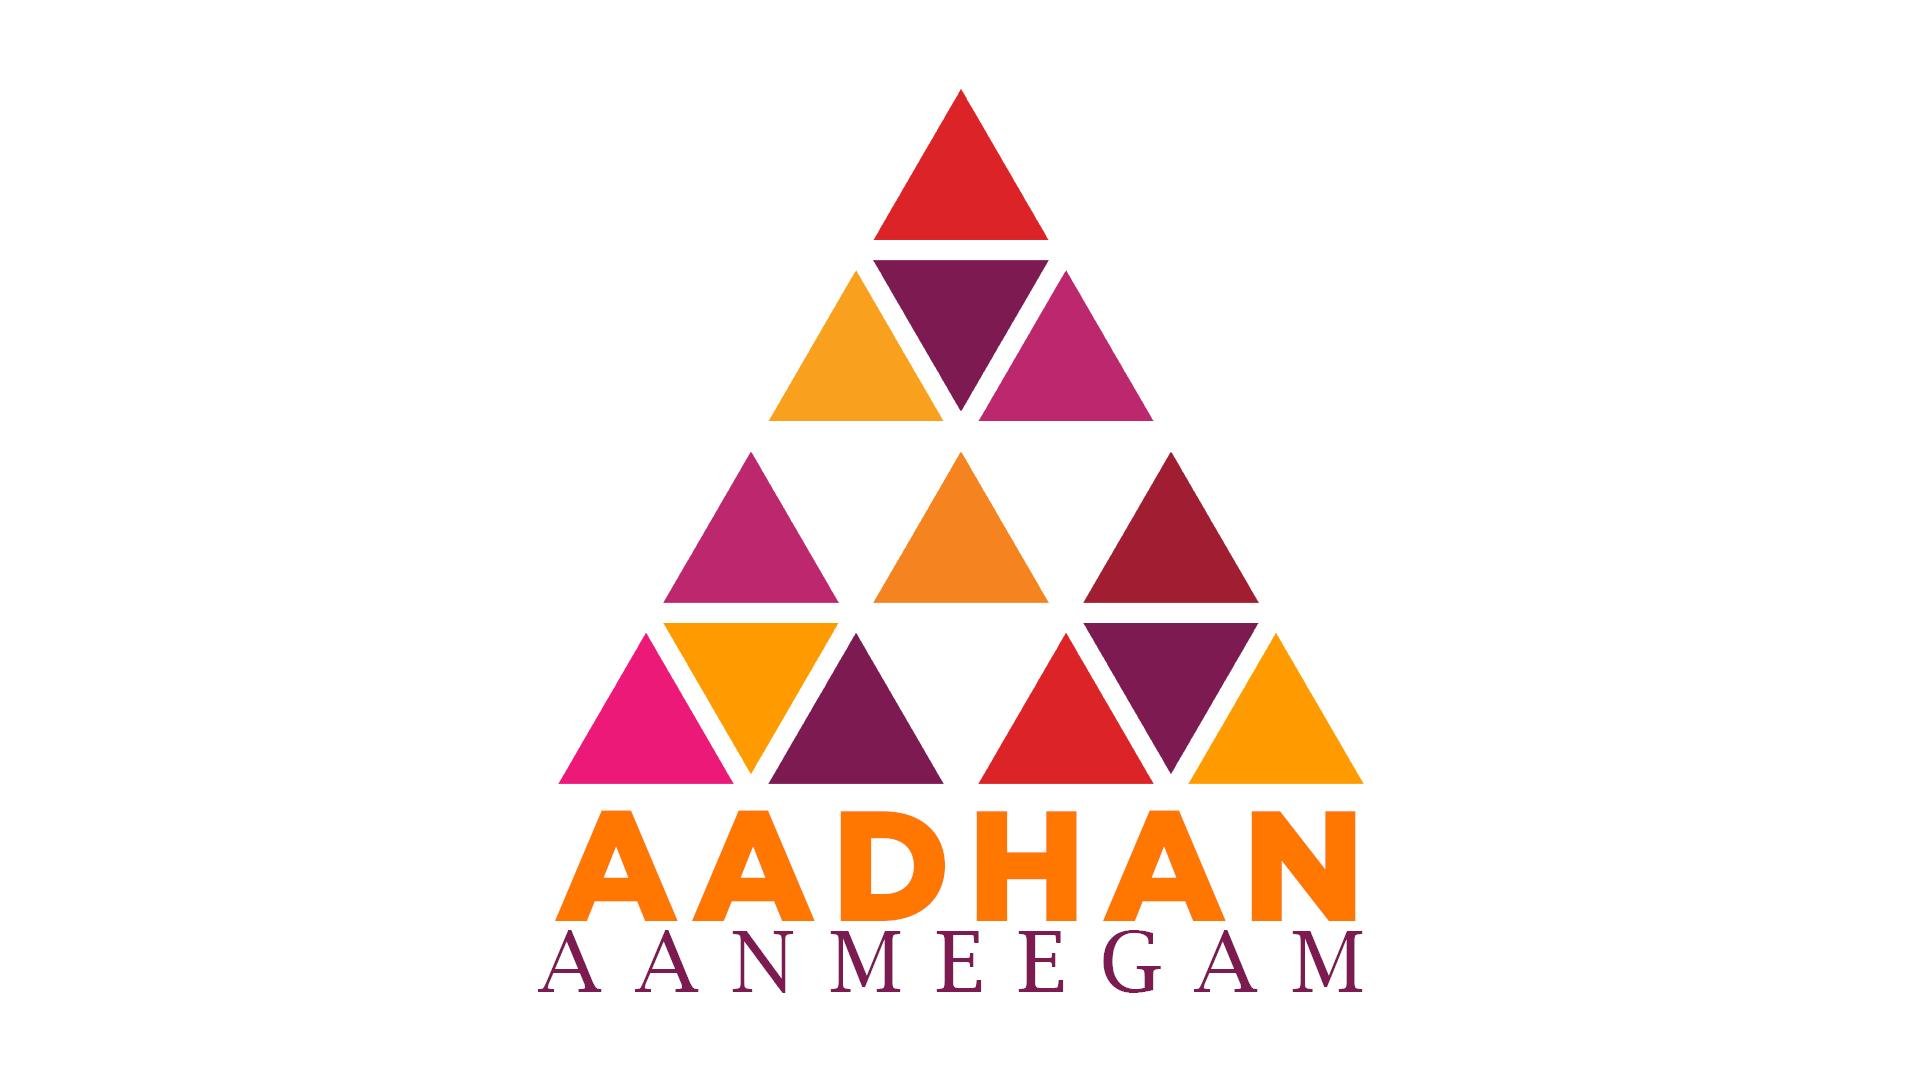 To subscribe - Aadhan Aanmeegam On Youtube

https://t.co/JvVmlbNkfx…